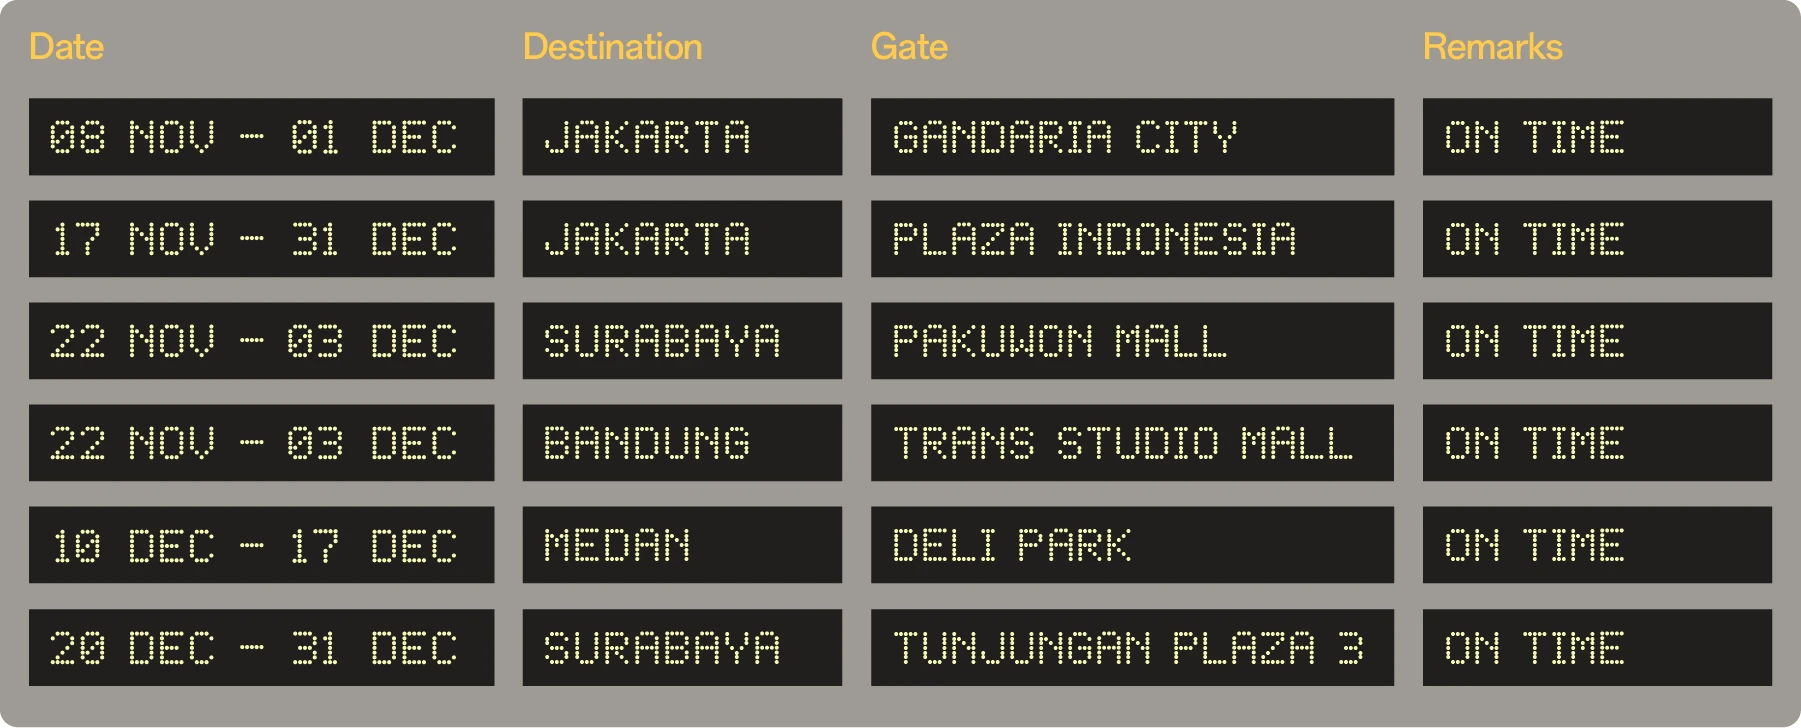 Departure Display Image